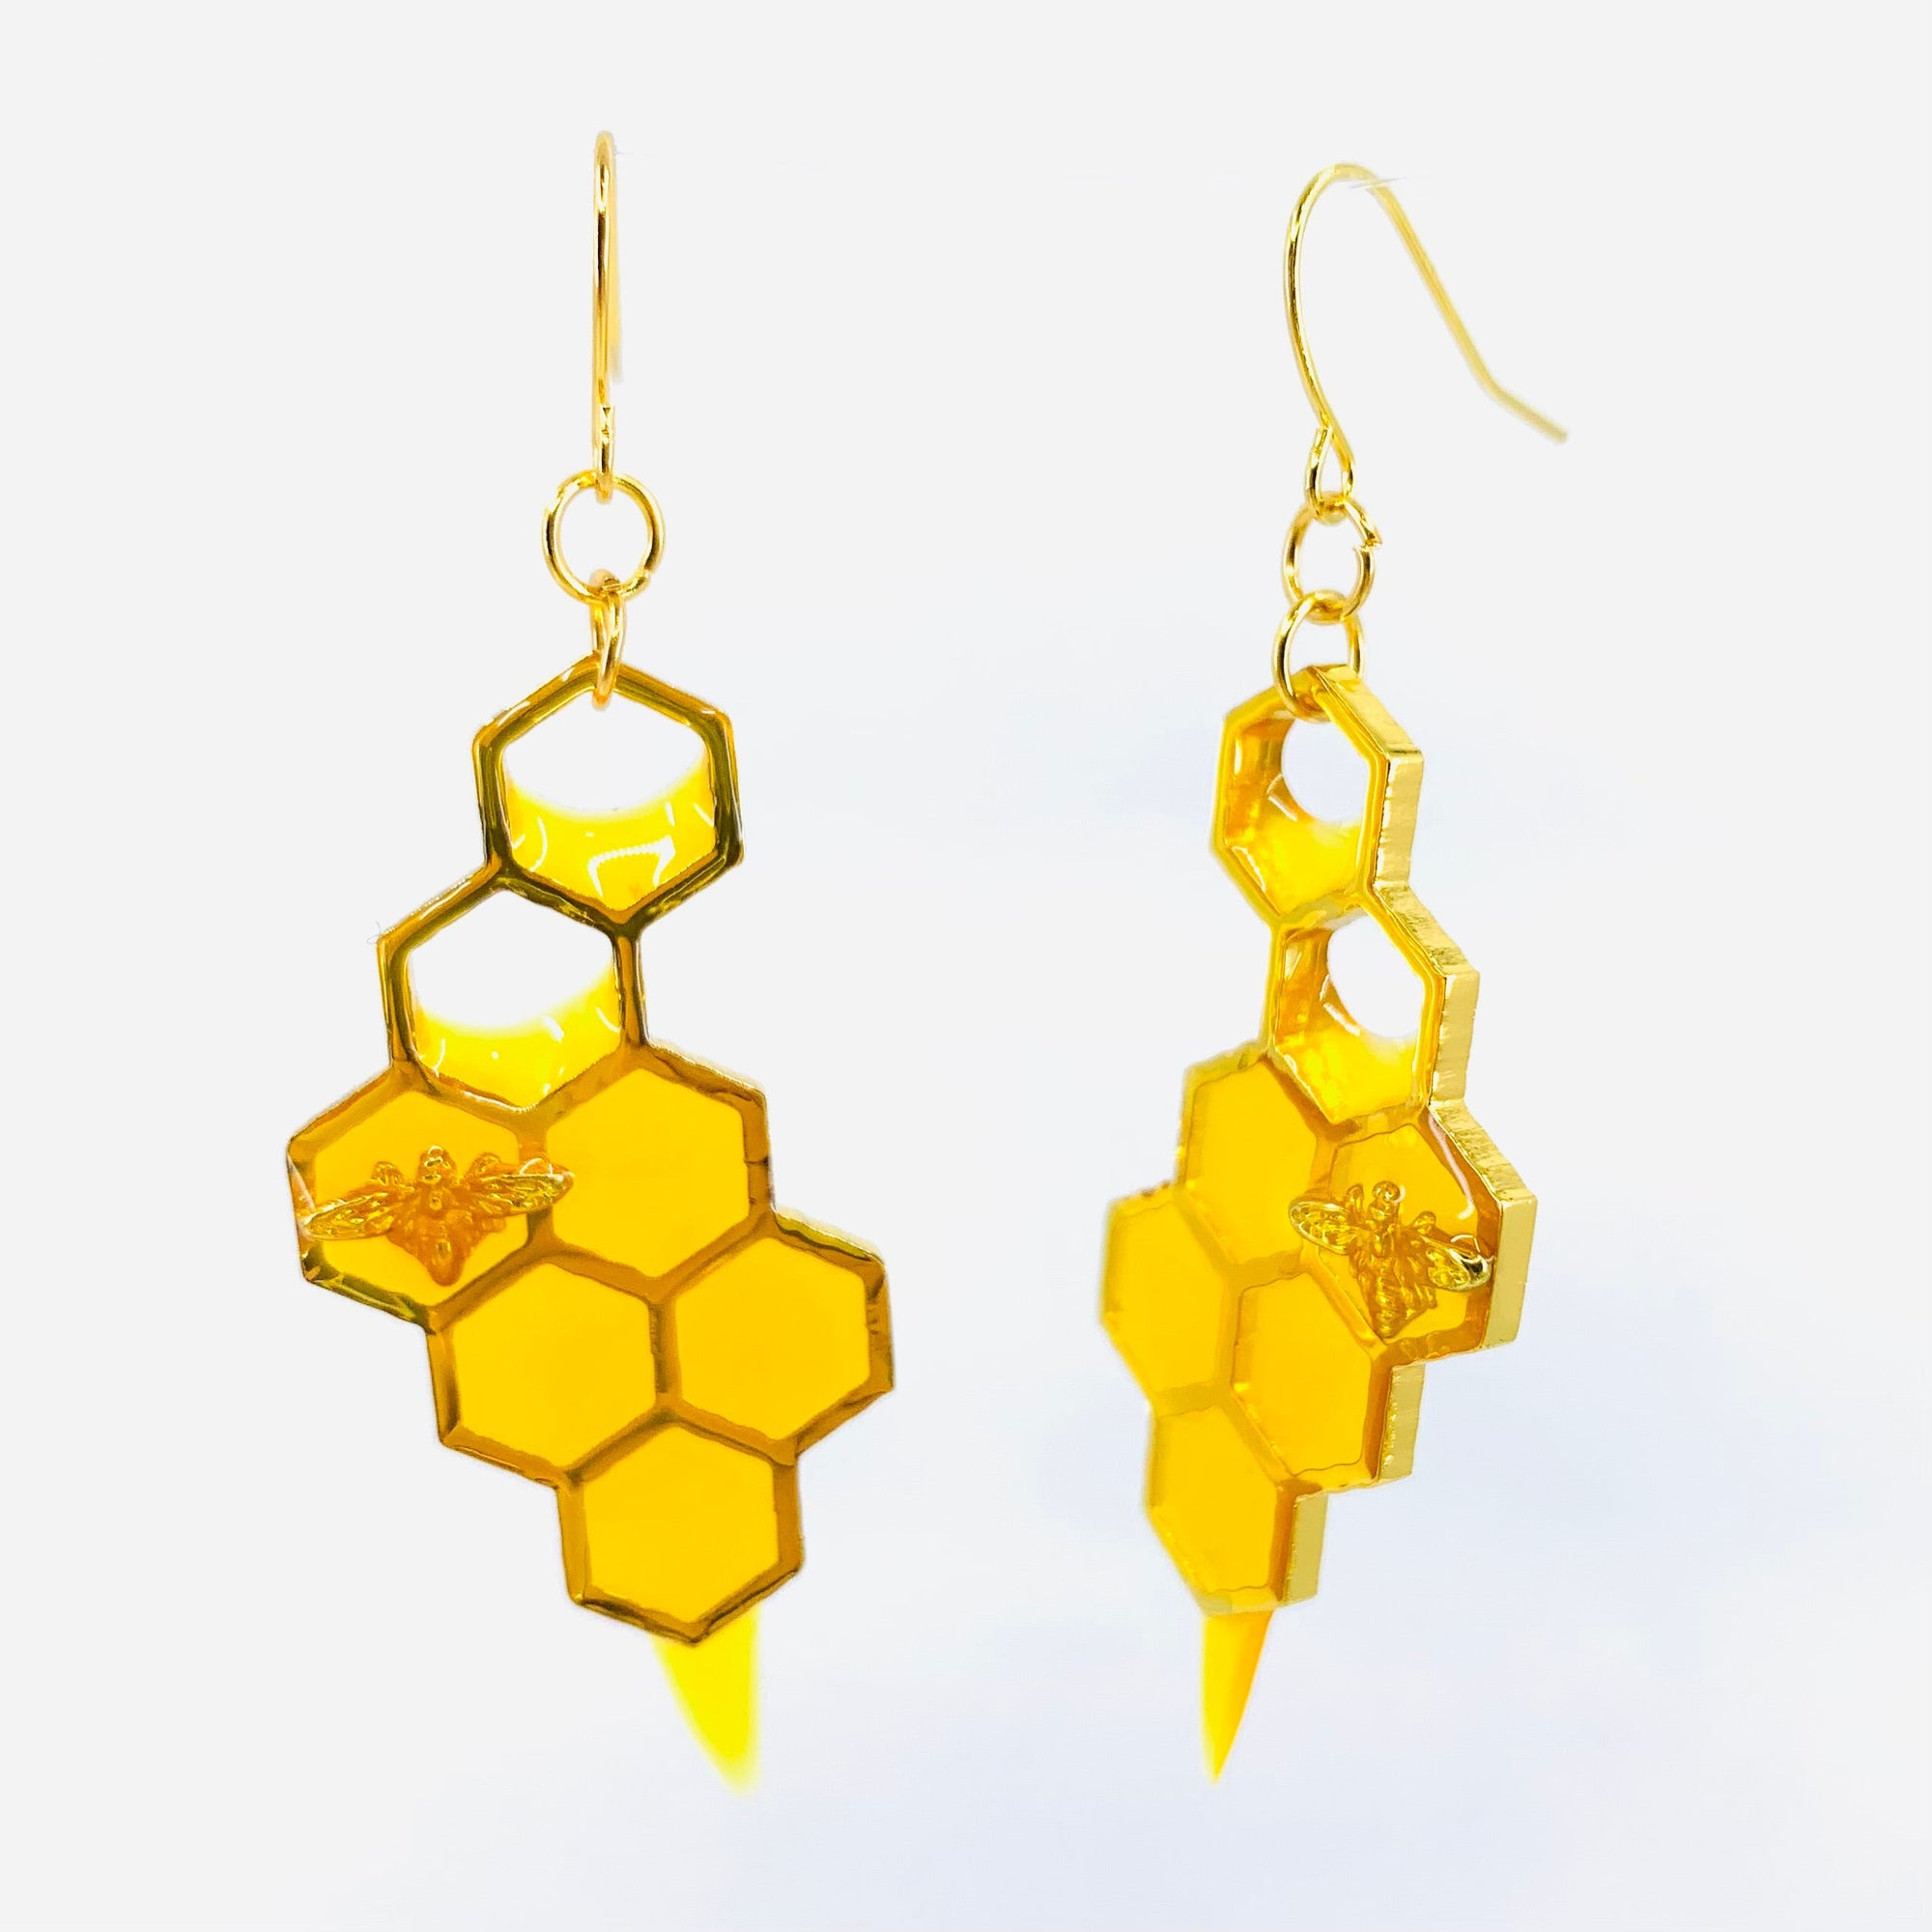 Honeycomb Decor by Justlikewood Honeycomb Jewelry Honeycomb 